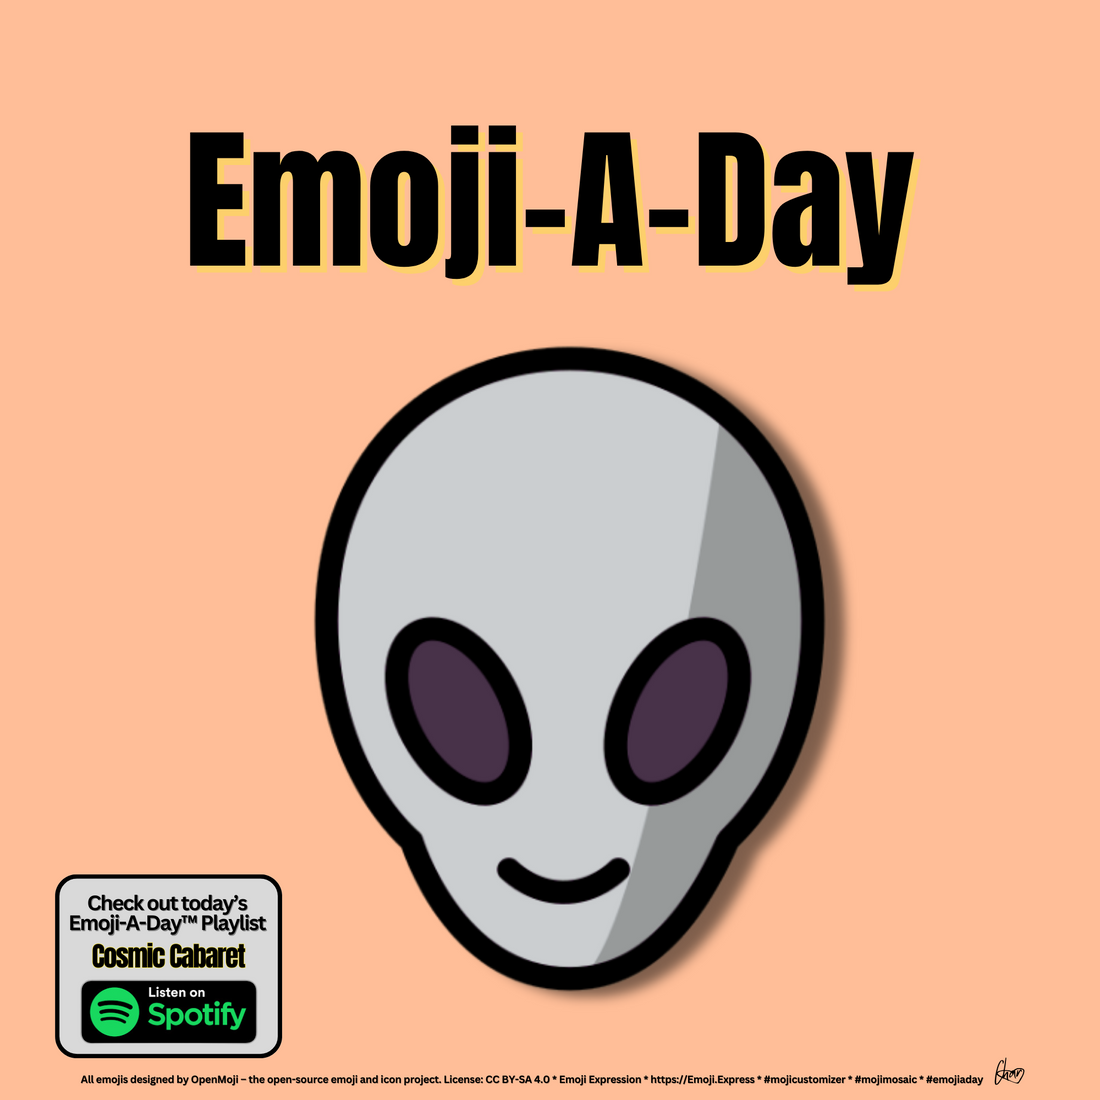 Emoij-A-Day theme with Alien emoji and Cosmic Cabaret Spotify Playlist